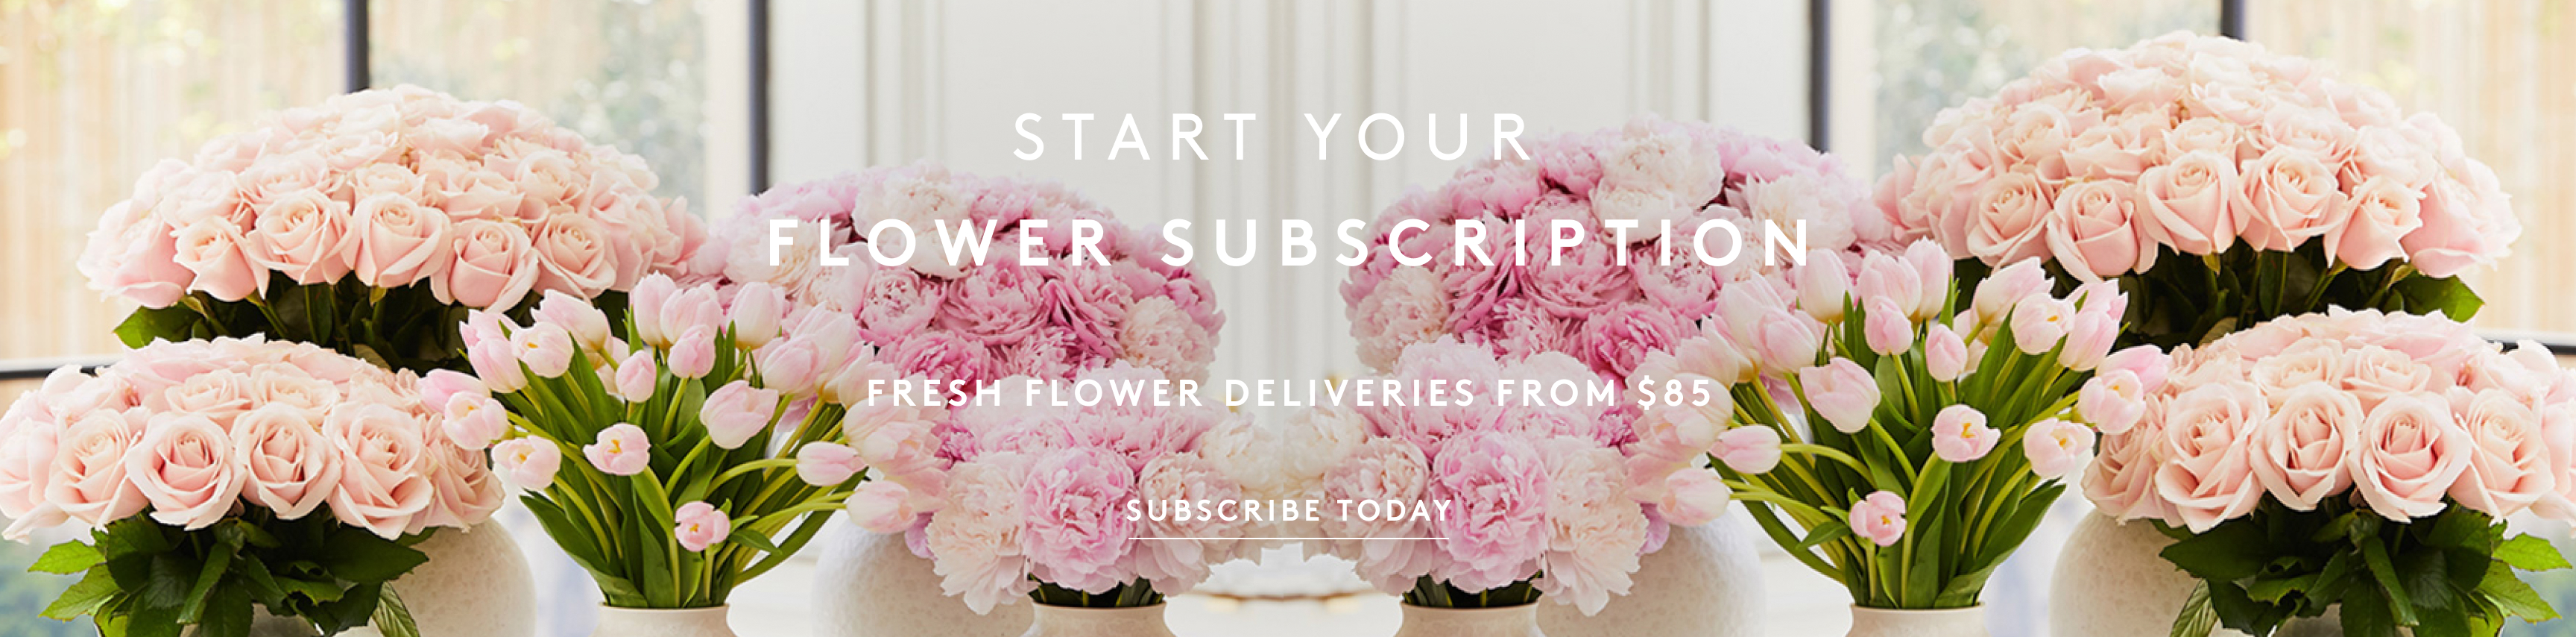 Flower Subscription